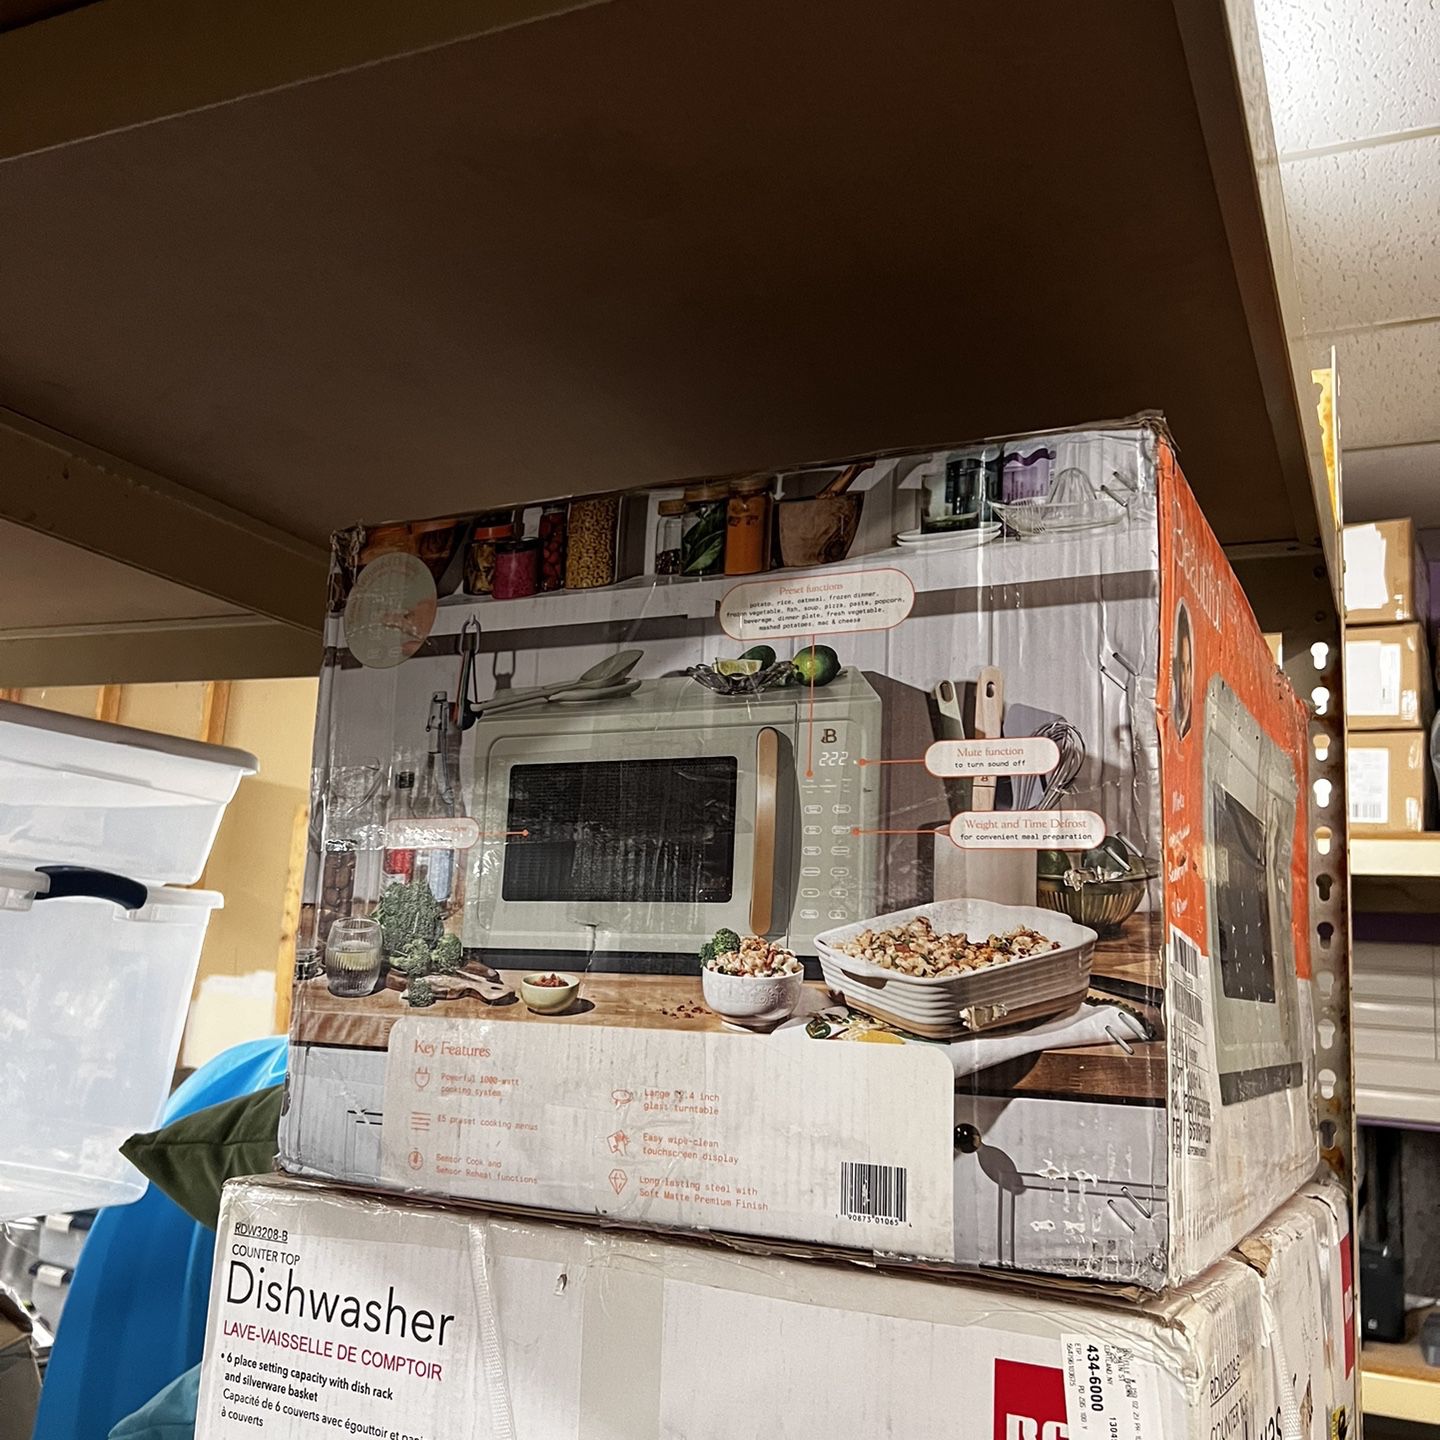 Beautiful 1.1 Cu ft 1000 Watt, Sensor Microwave Oven, Sage Green by Drew  Barrymore